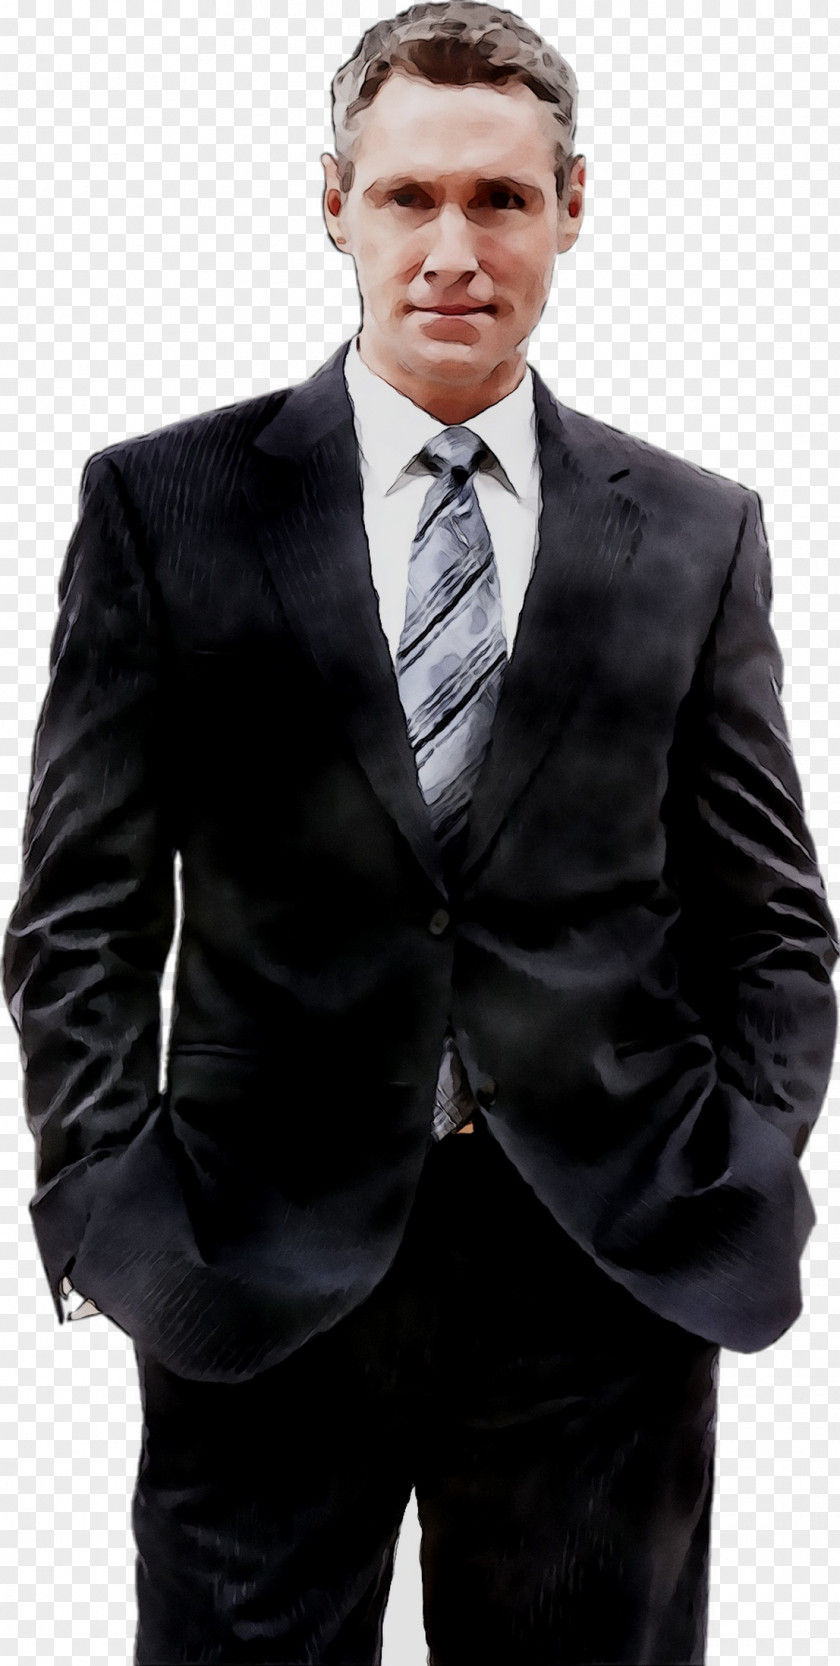 Suit Tuxedo Necktie Man Clothing PNG